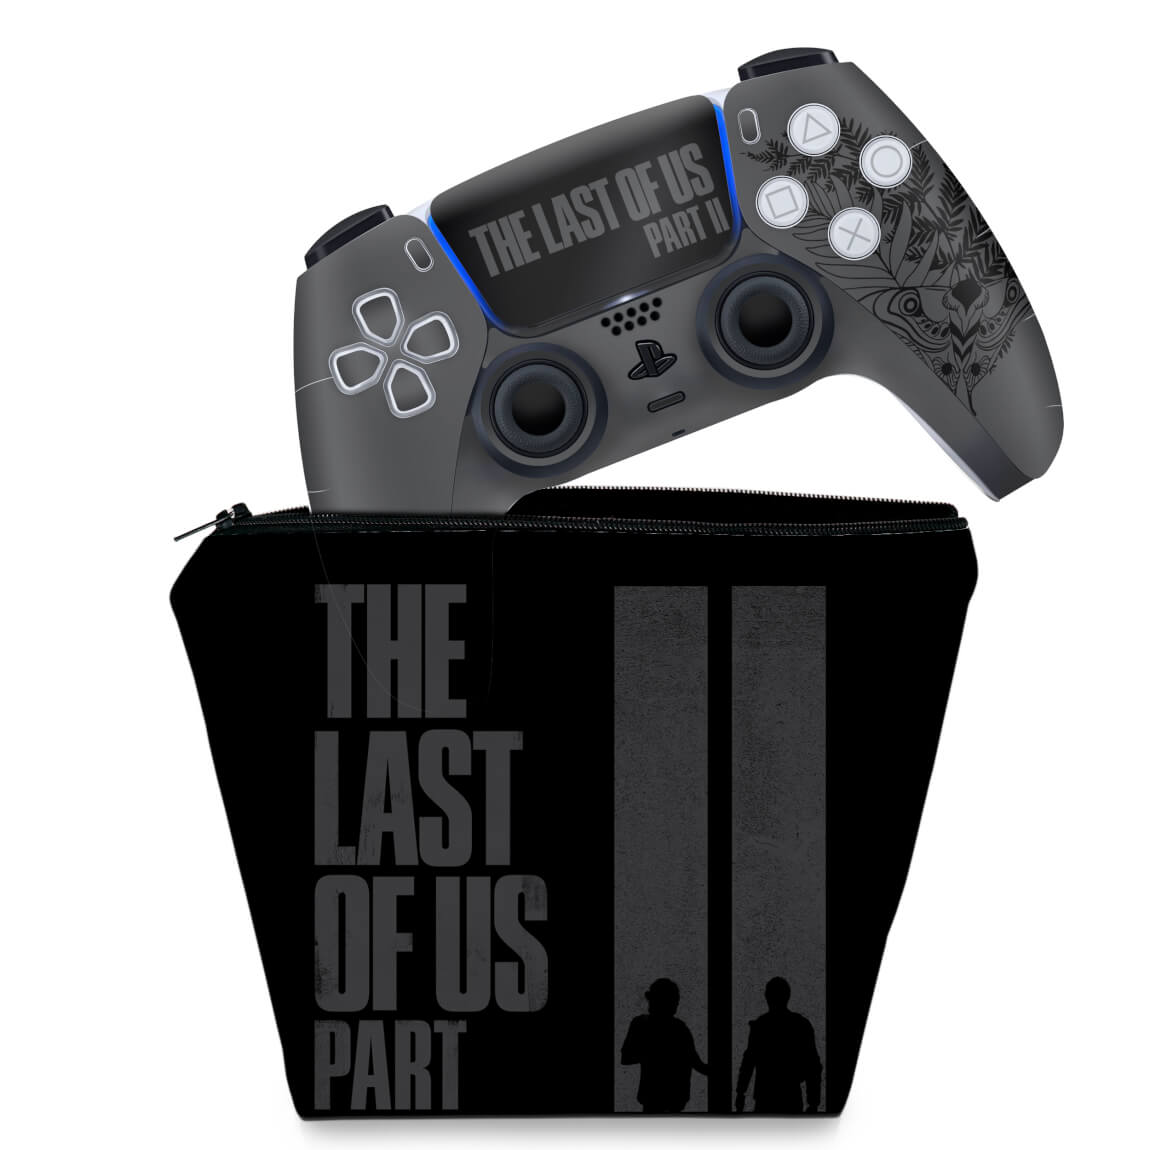 THE LAST OF US Part II Remastered PS5 - Catalogo  Mega-Mania A Loja dos  Jogadores - Jogos, Consolas, Playstation, Xbox, Nintendo